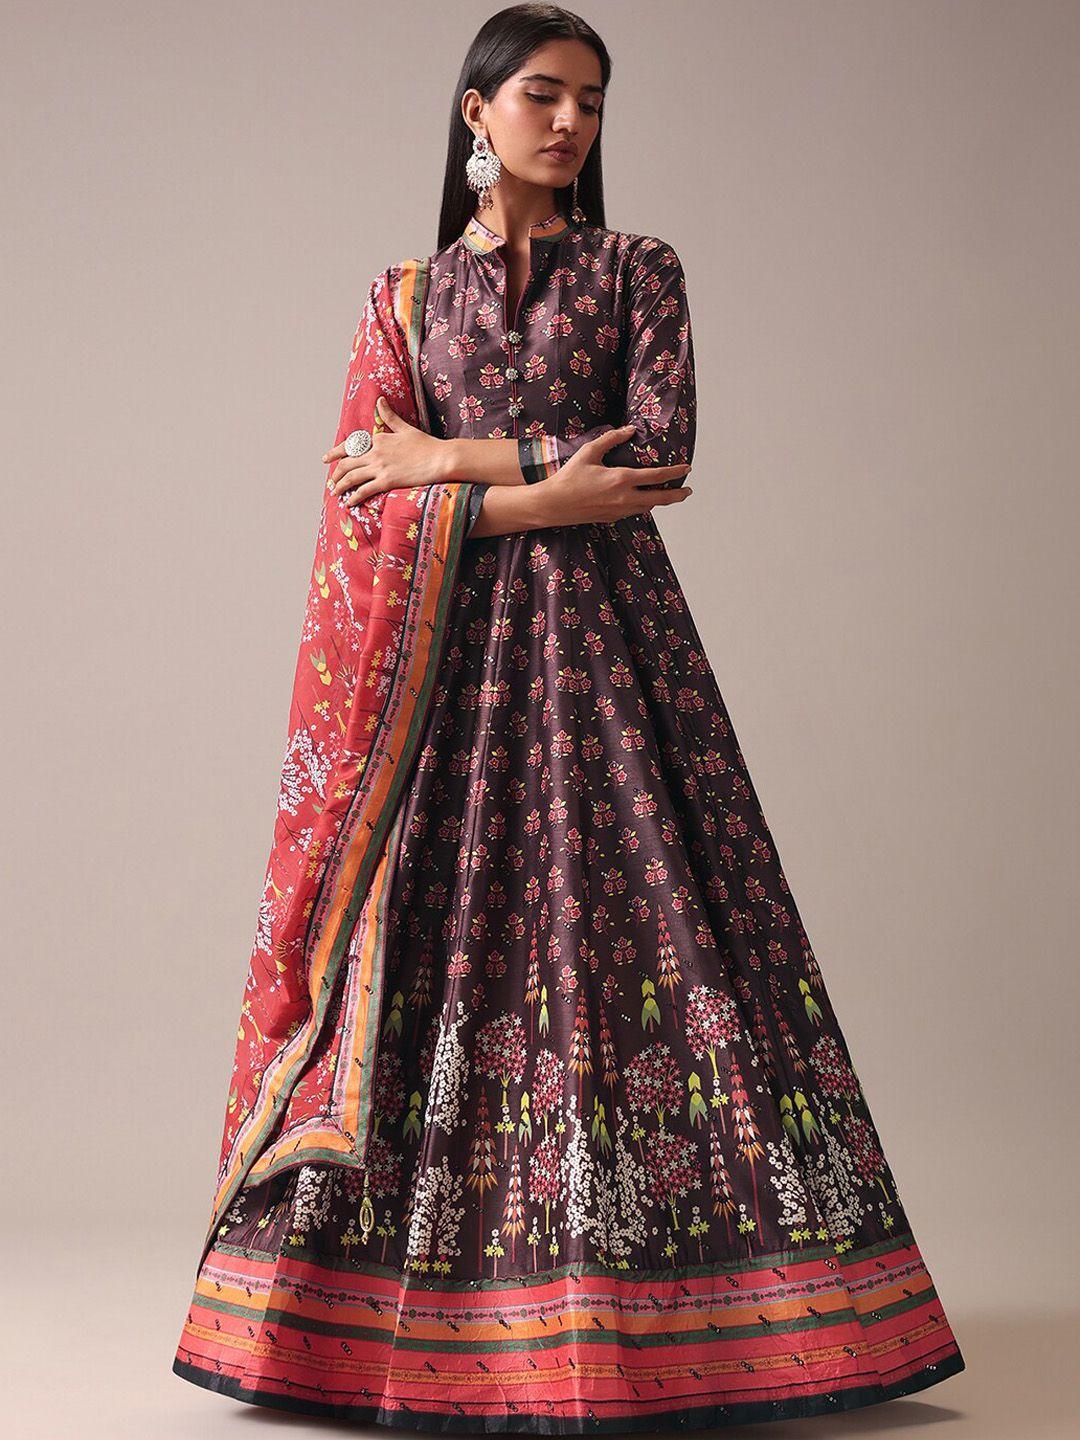 kalki fashion ethnic motifs printed belted tussar silk maxi dress with dupatta